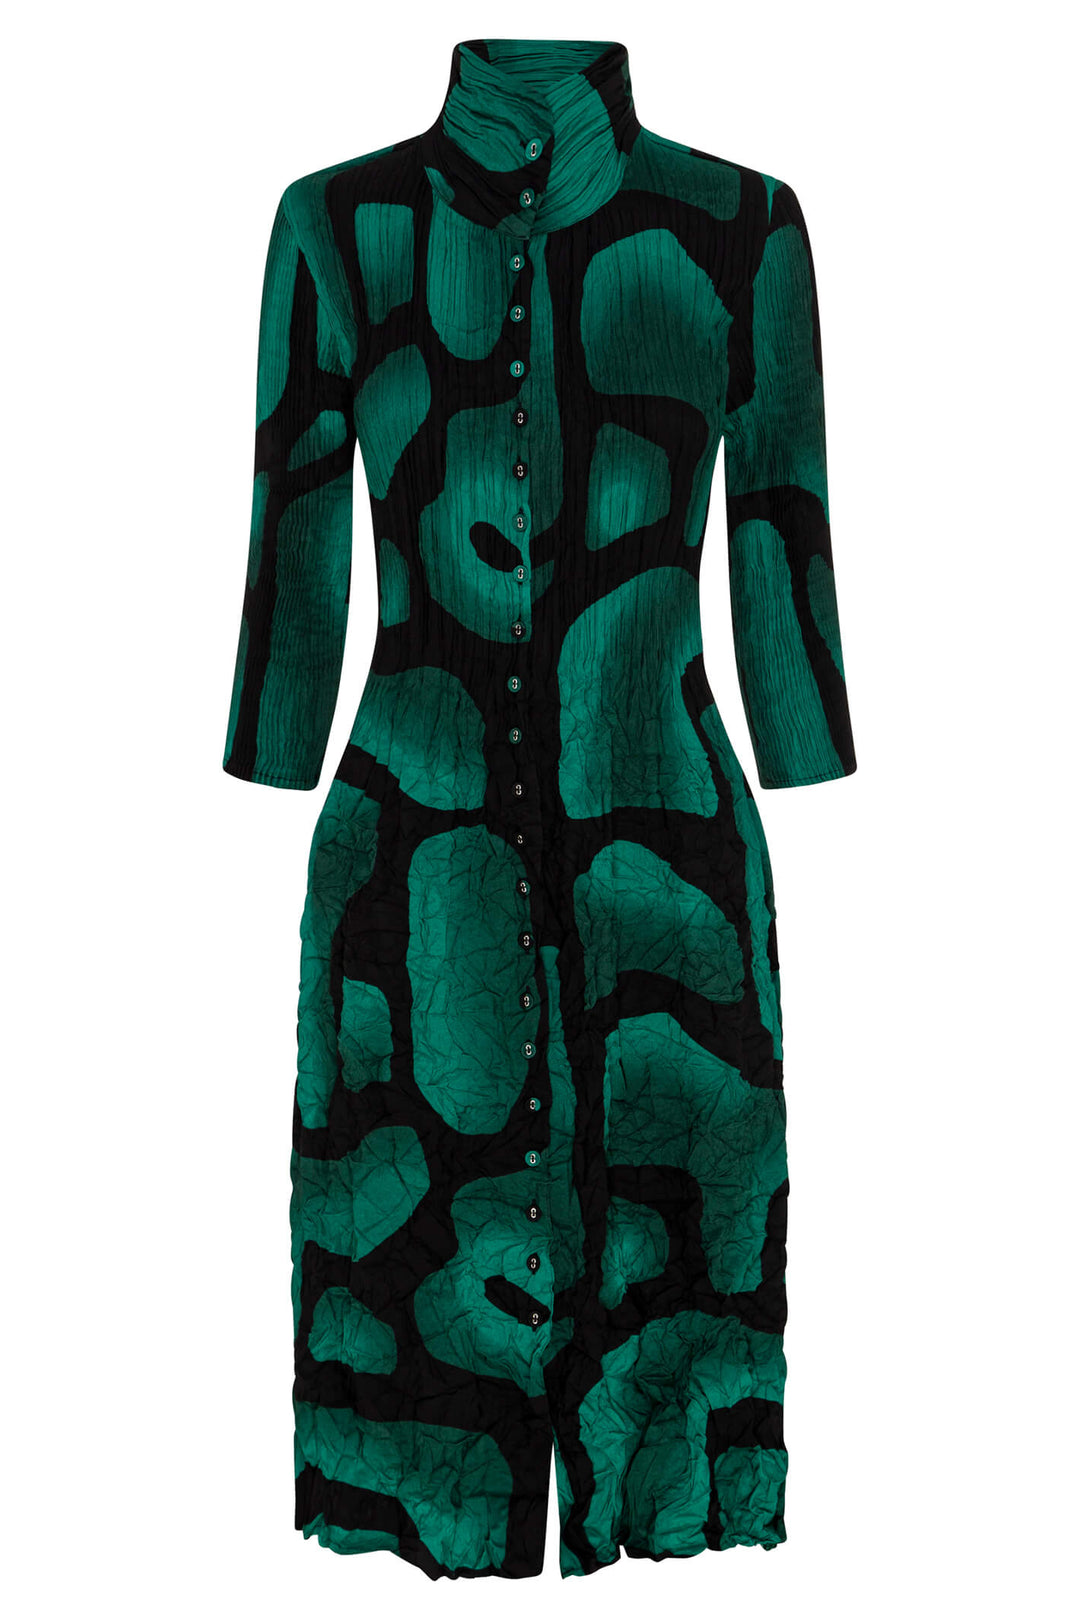 Alquema ACC308 Nehru Green Tucson Coat Dress - Experience Boutique